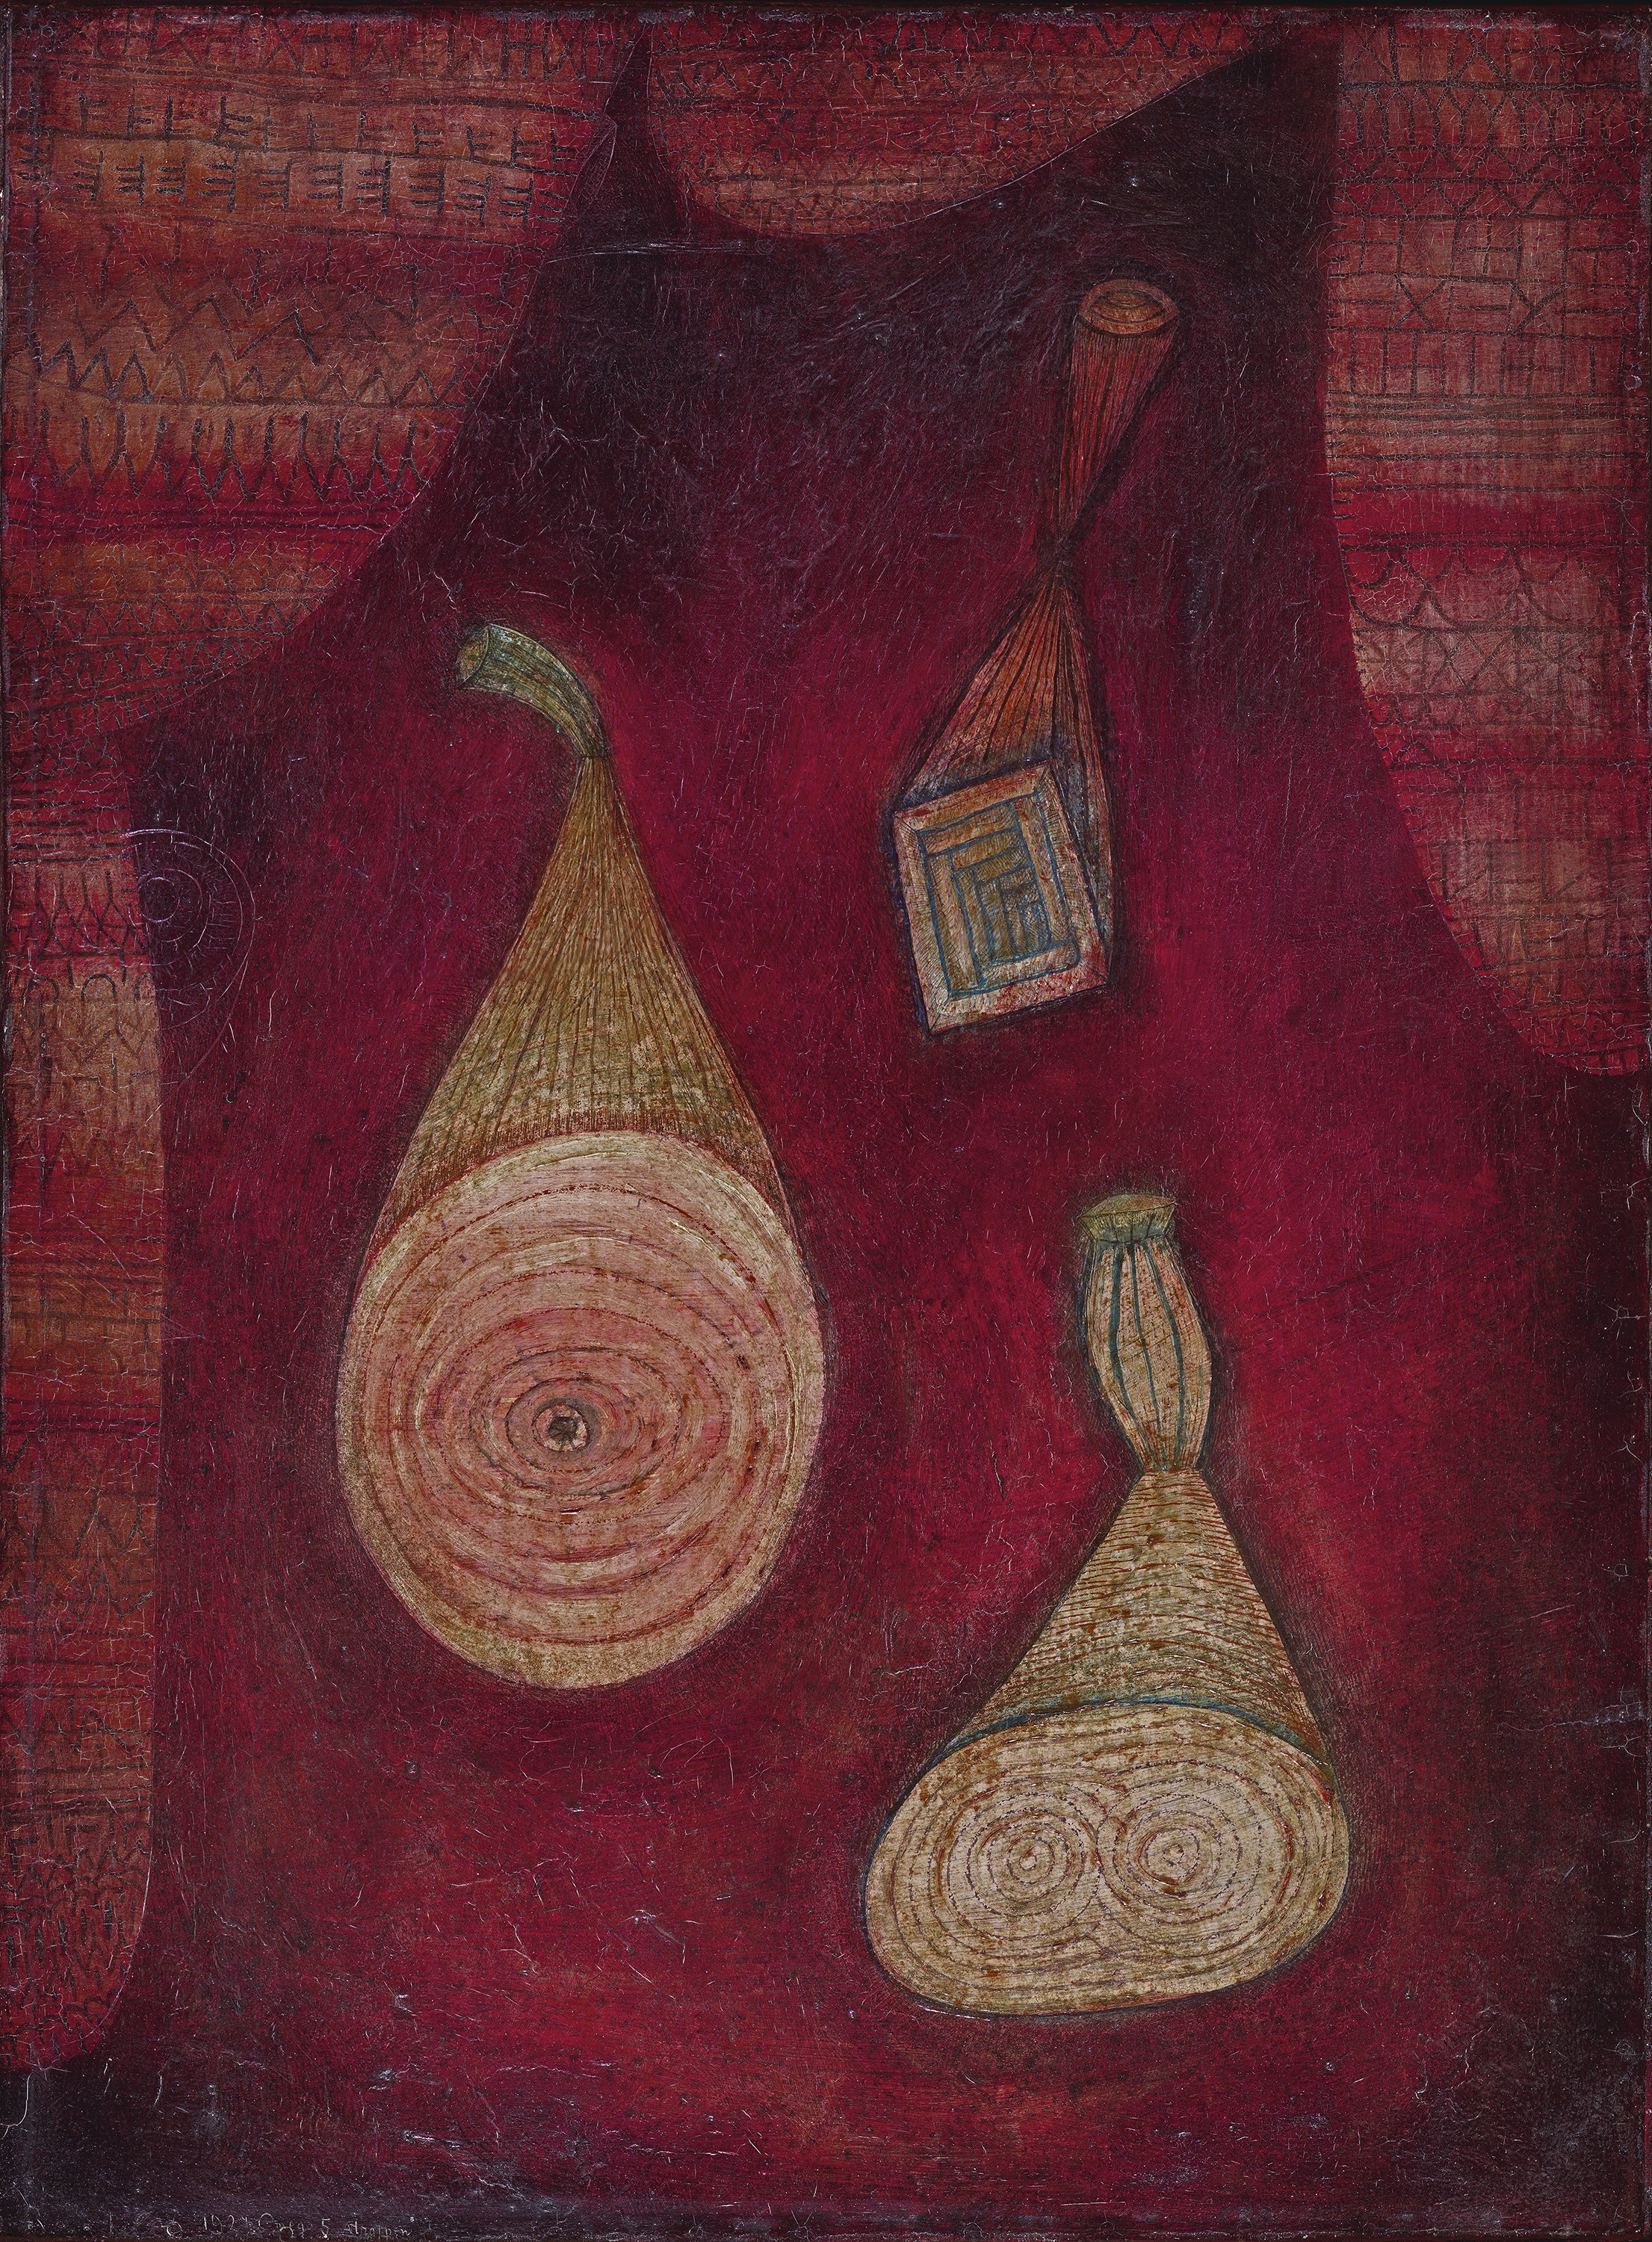 Omega 5 (Objetos de imitación), 1927, 295. Paul Klee